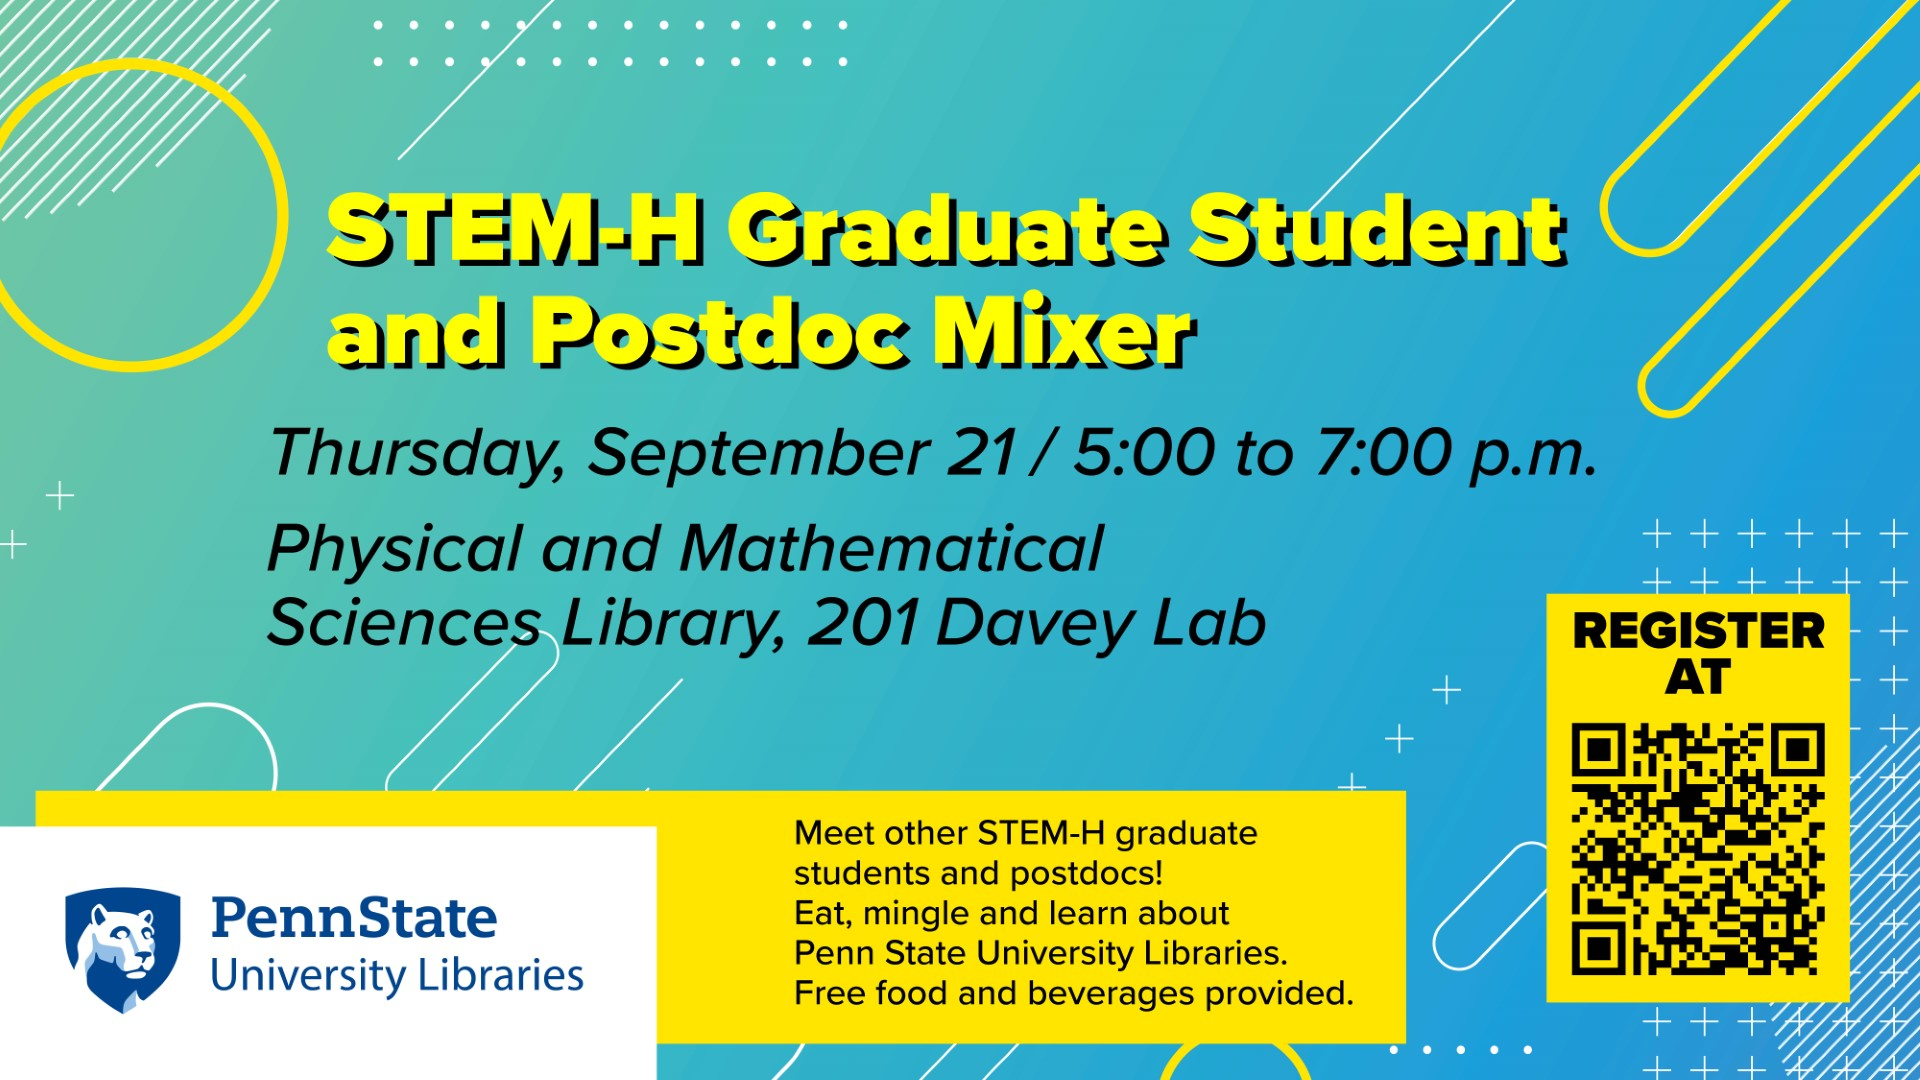 penn-state-university-libraries-stem-h-graduate-student-and-postdoc-mixer-penn-state